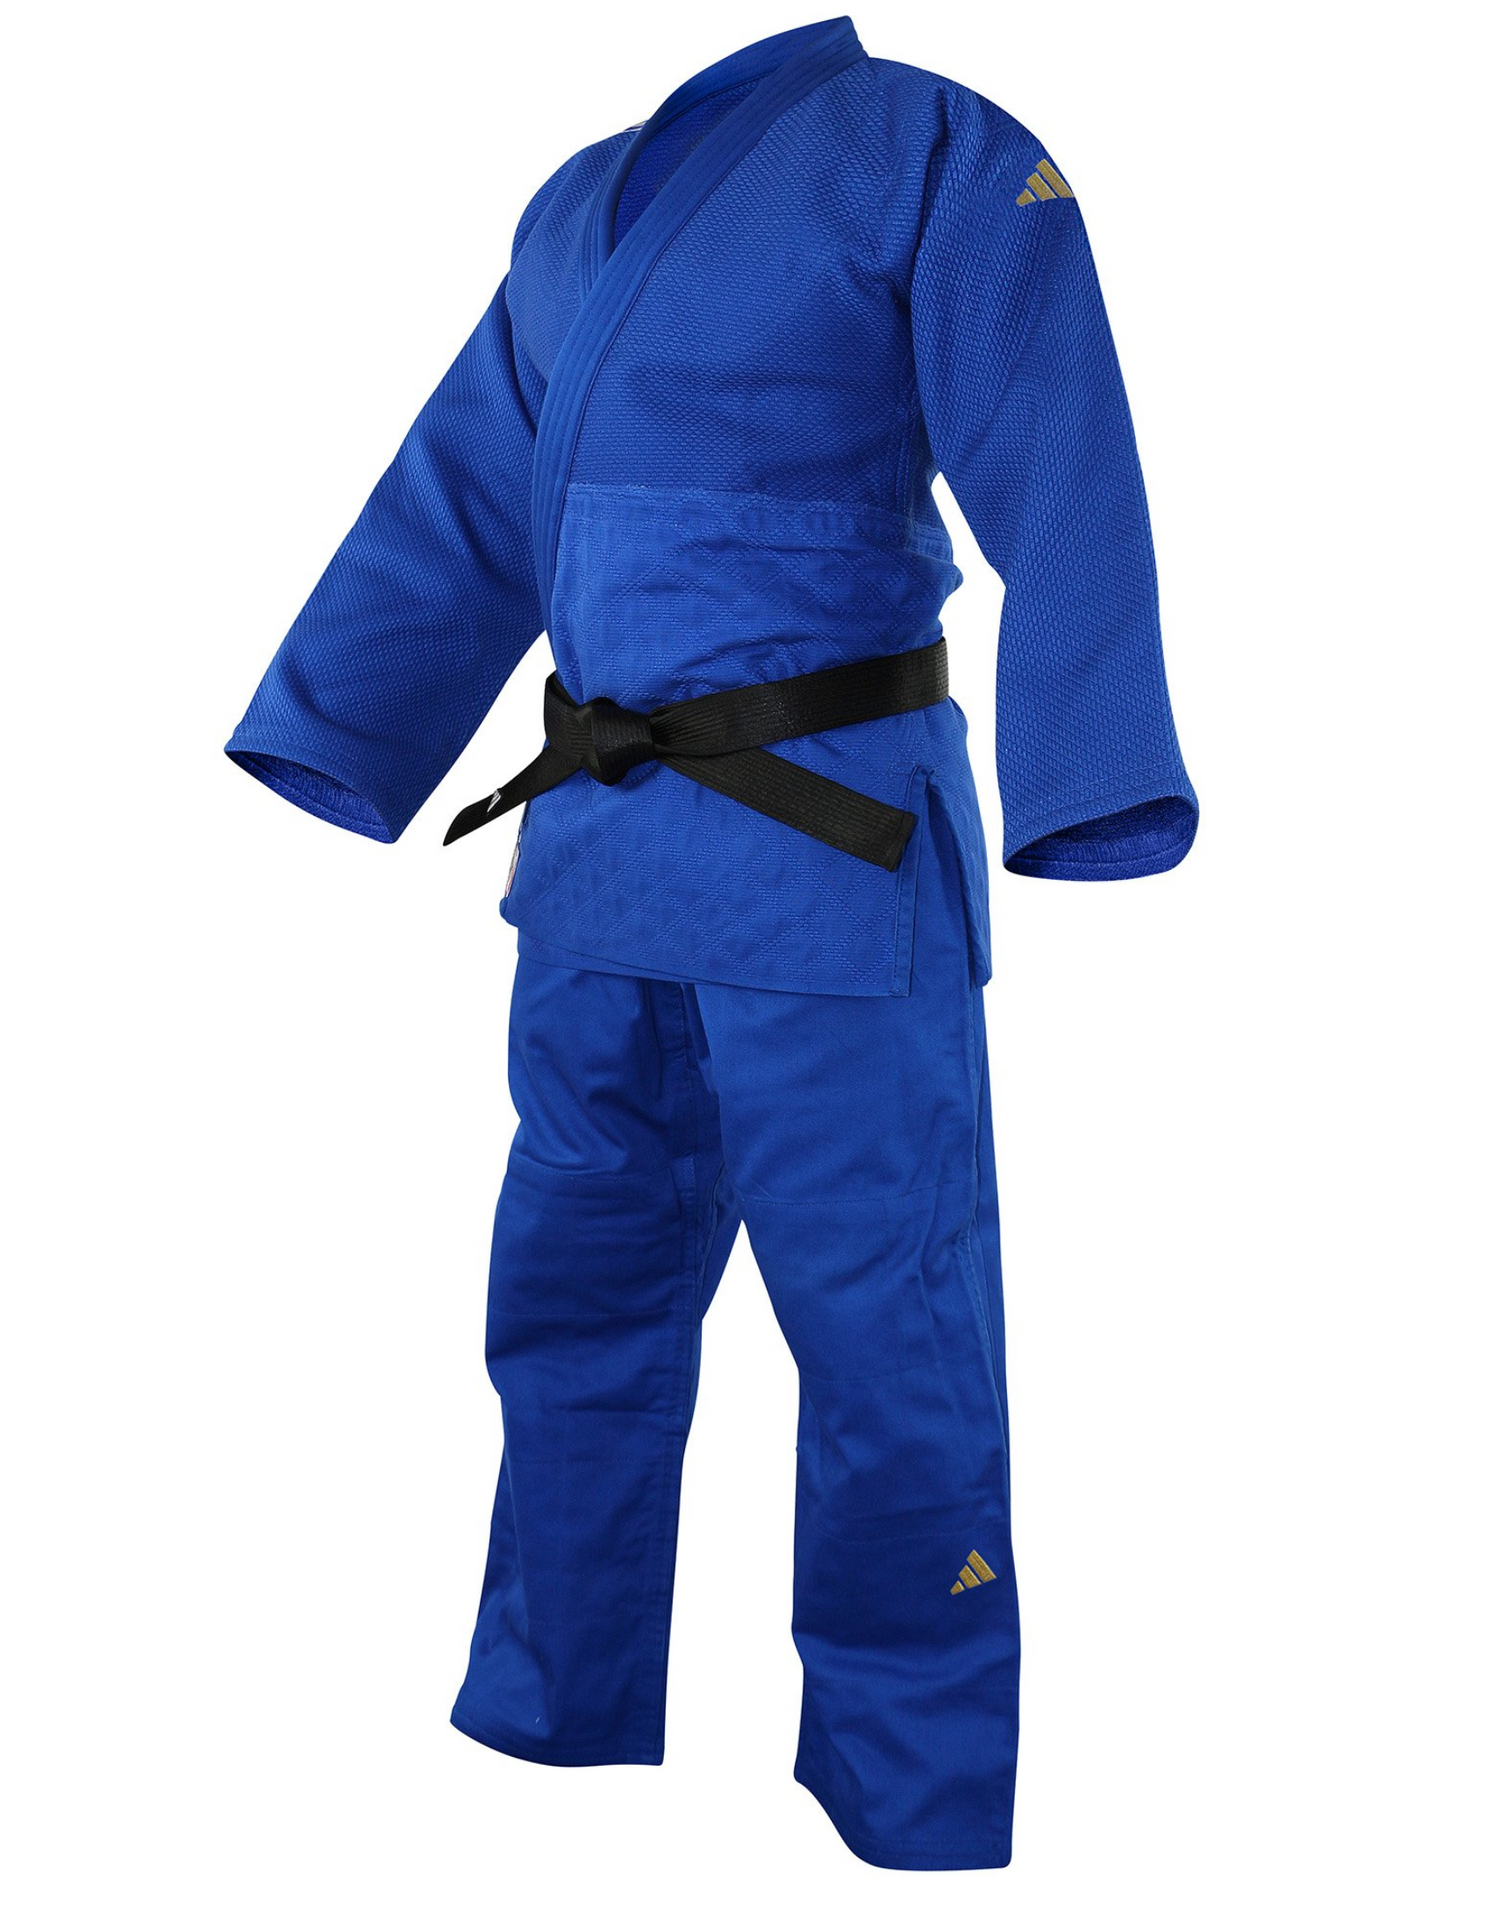 IJF Champion 3 Judo Gi - Azul de Adidas 